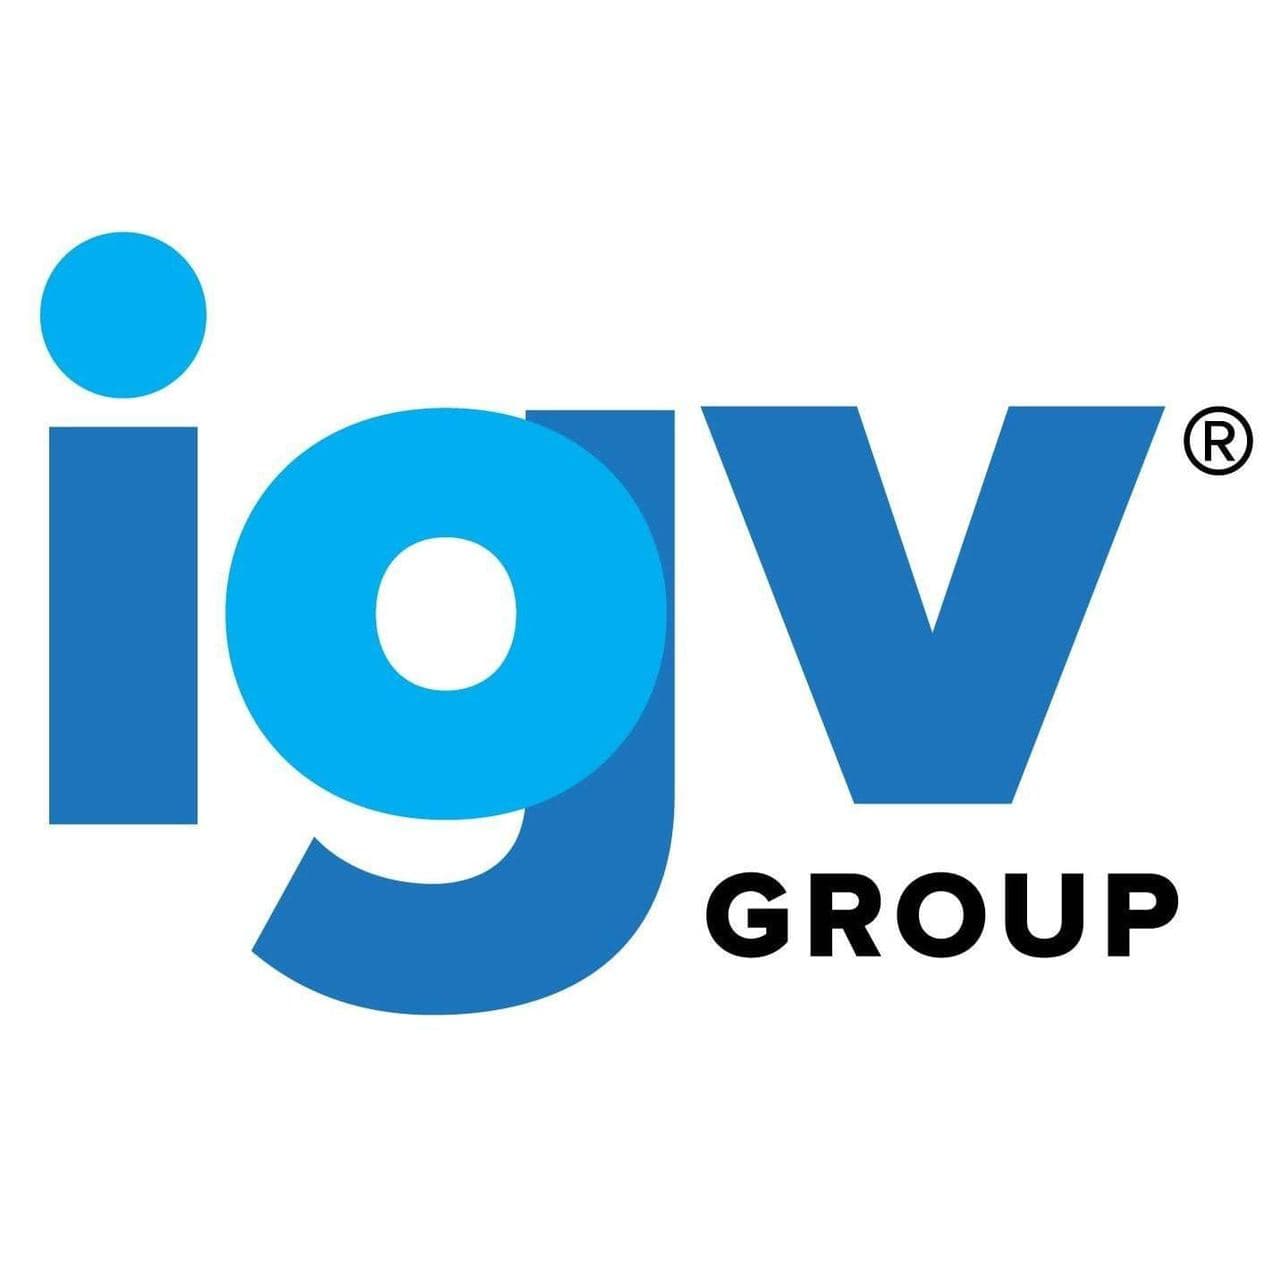 IGV Group